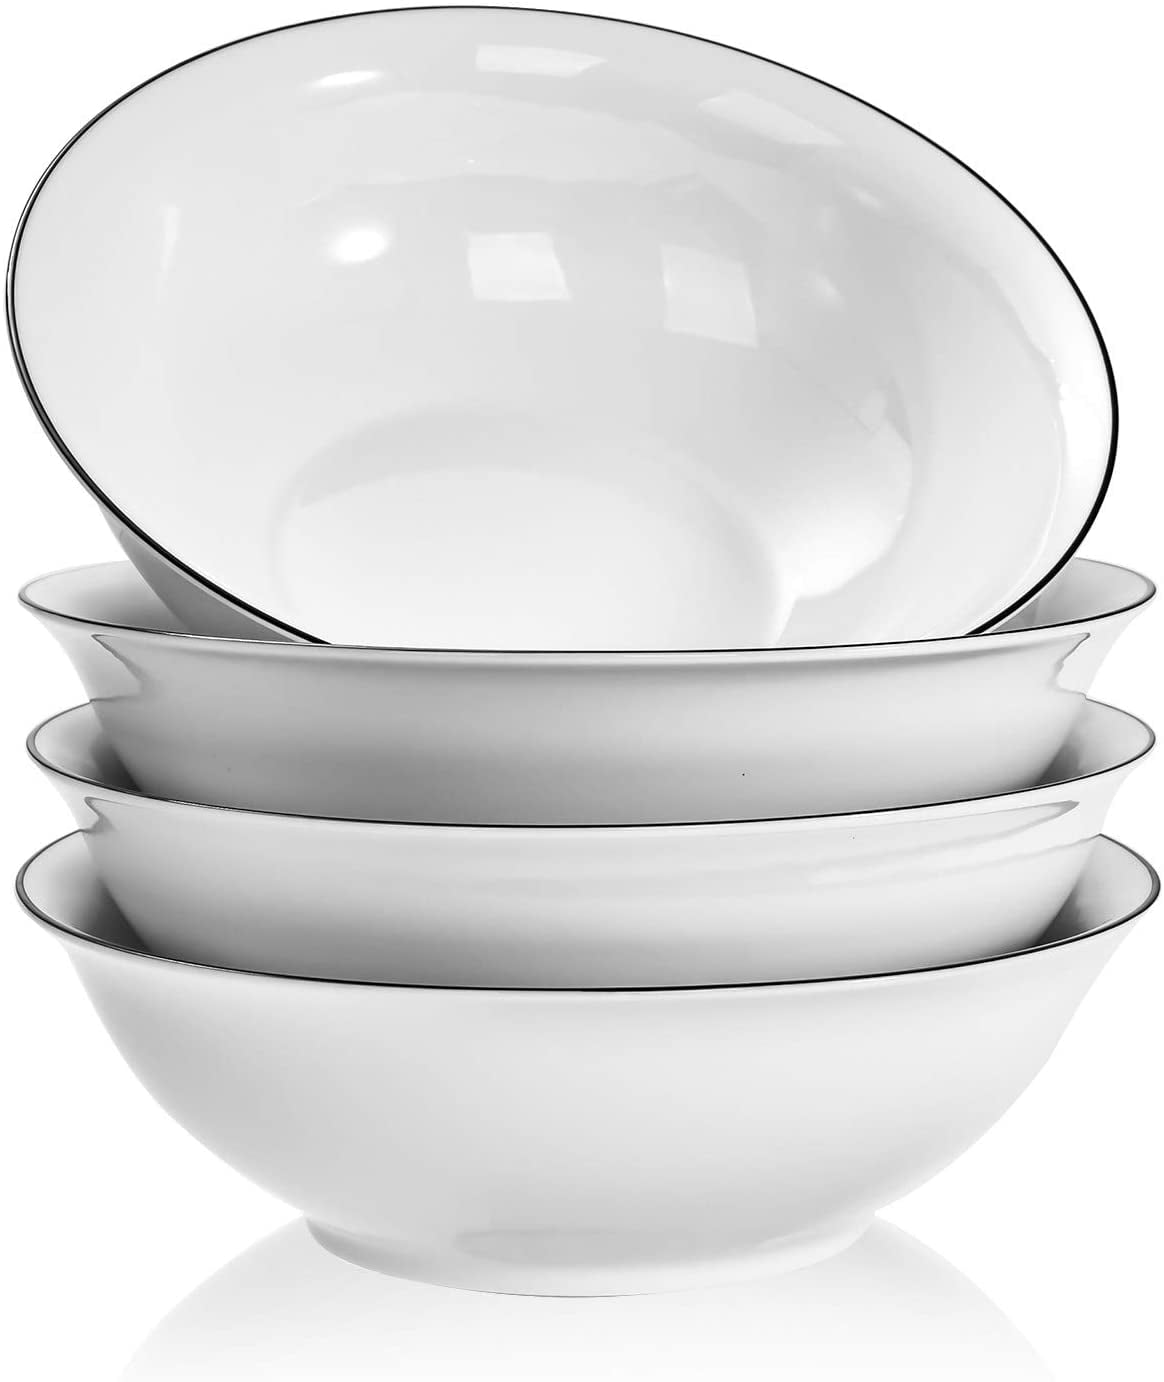 Set of 6 White Kitchen Bowl Salad Plate 12oz Plate Set TGLBT Ceramic Pasta Bowl